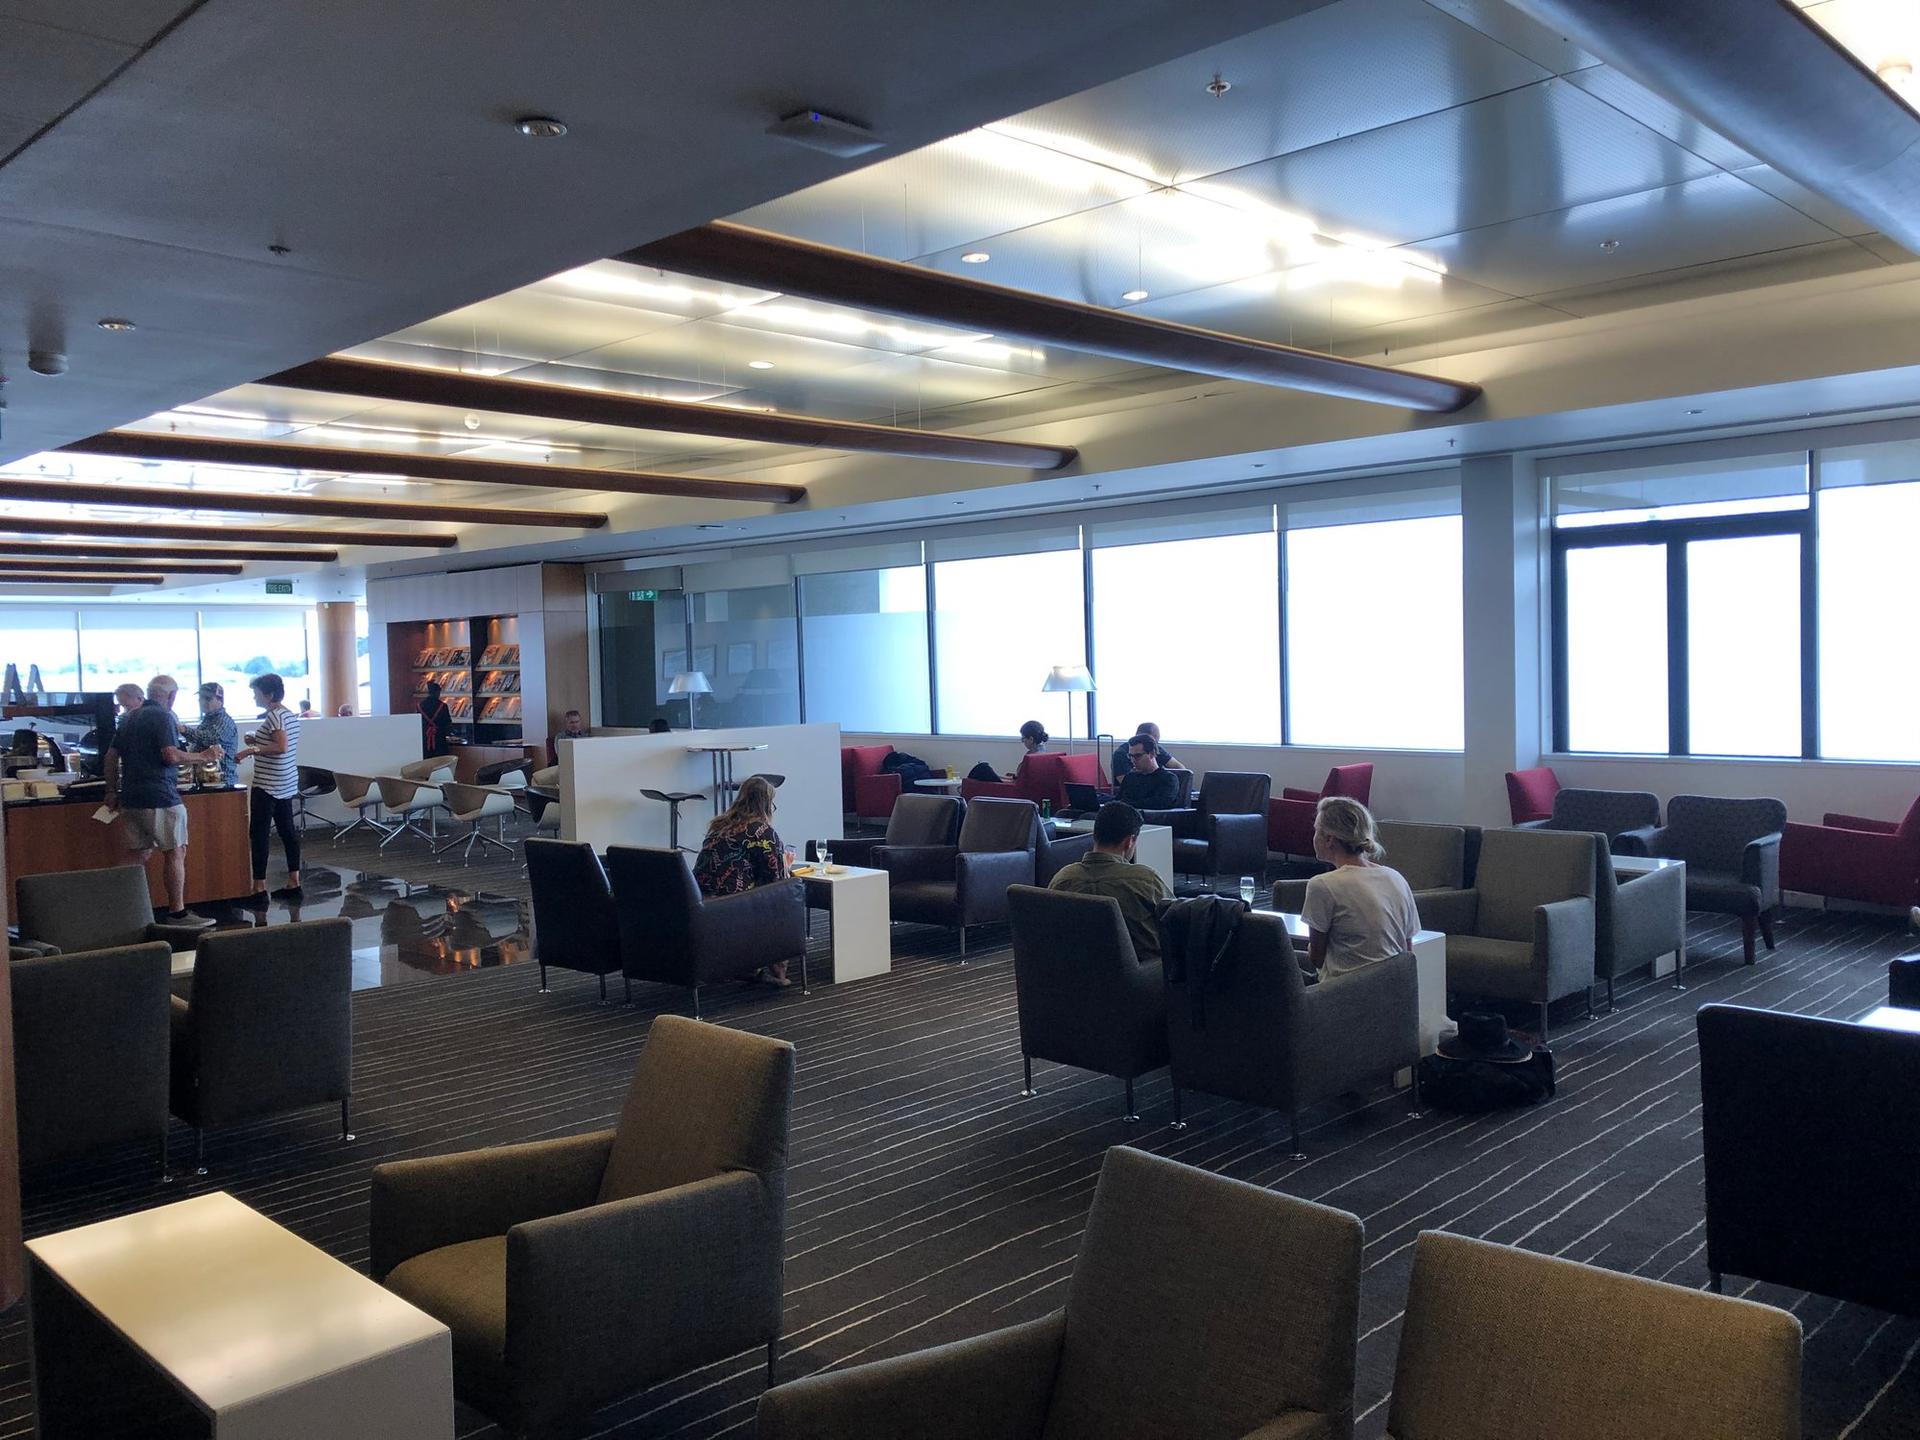 Qantas Airways International Business Lounge image 21 of 37